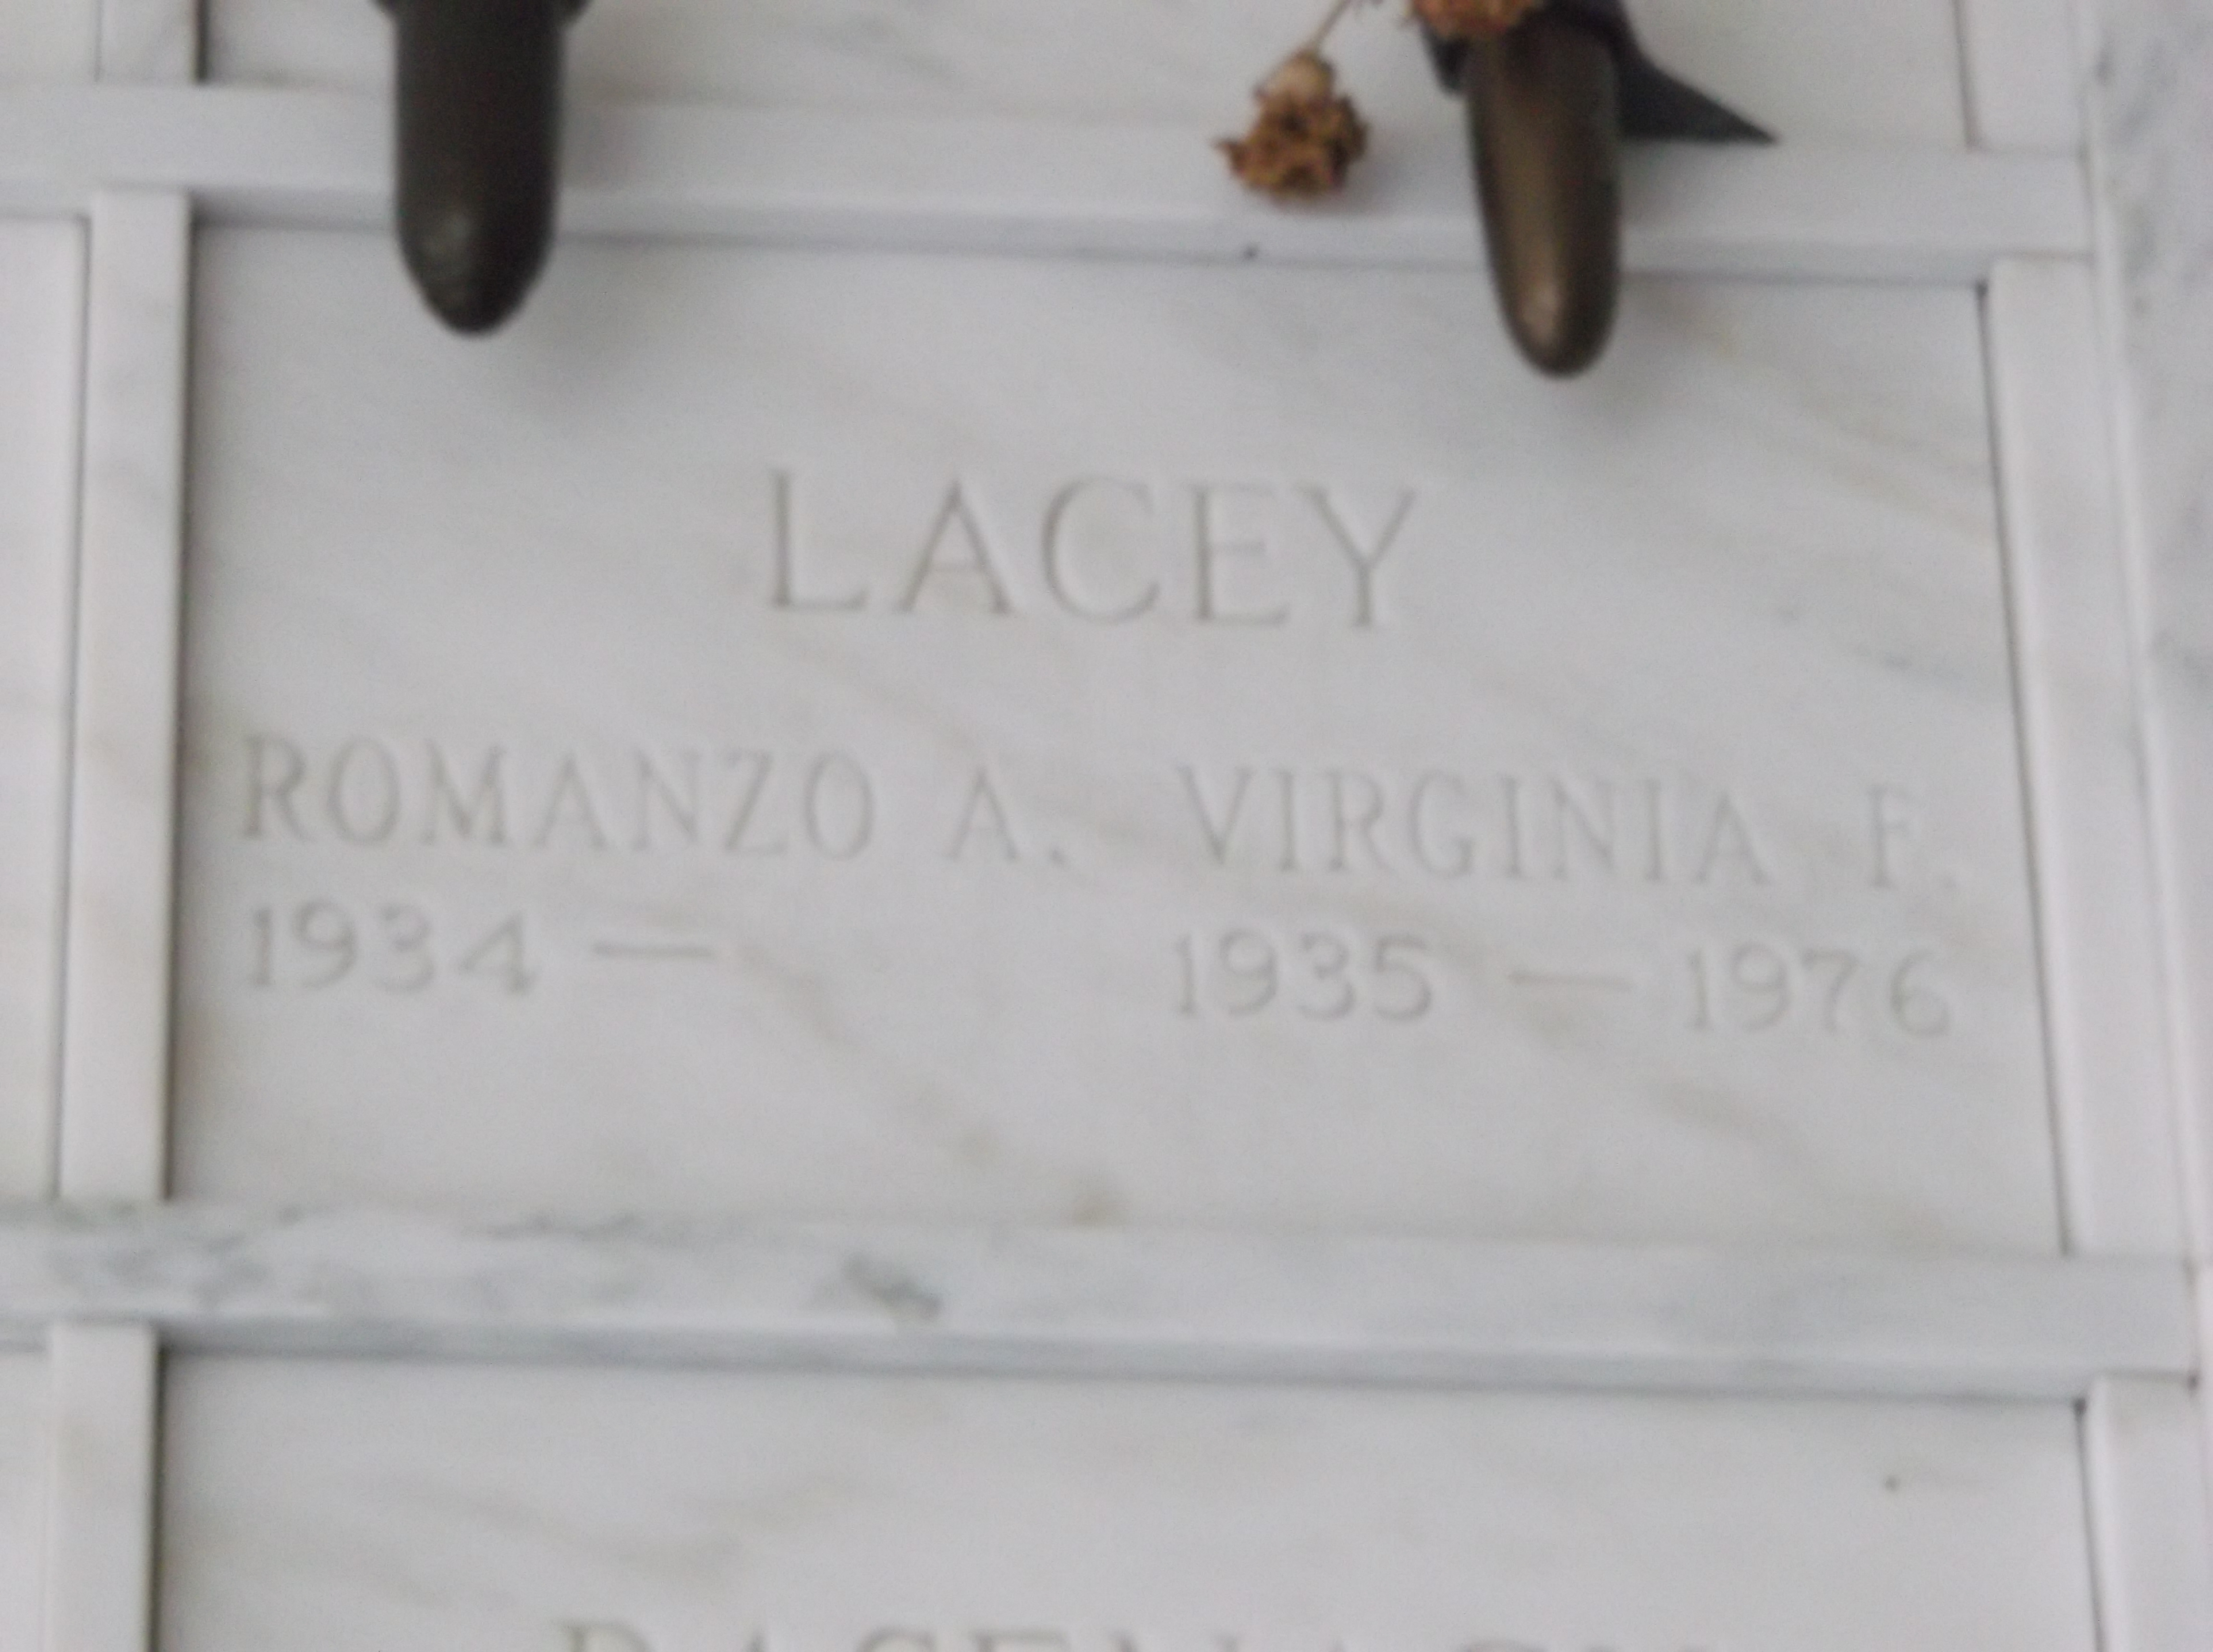 Virginia F Lacey